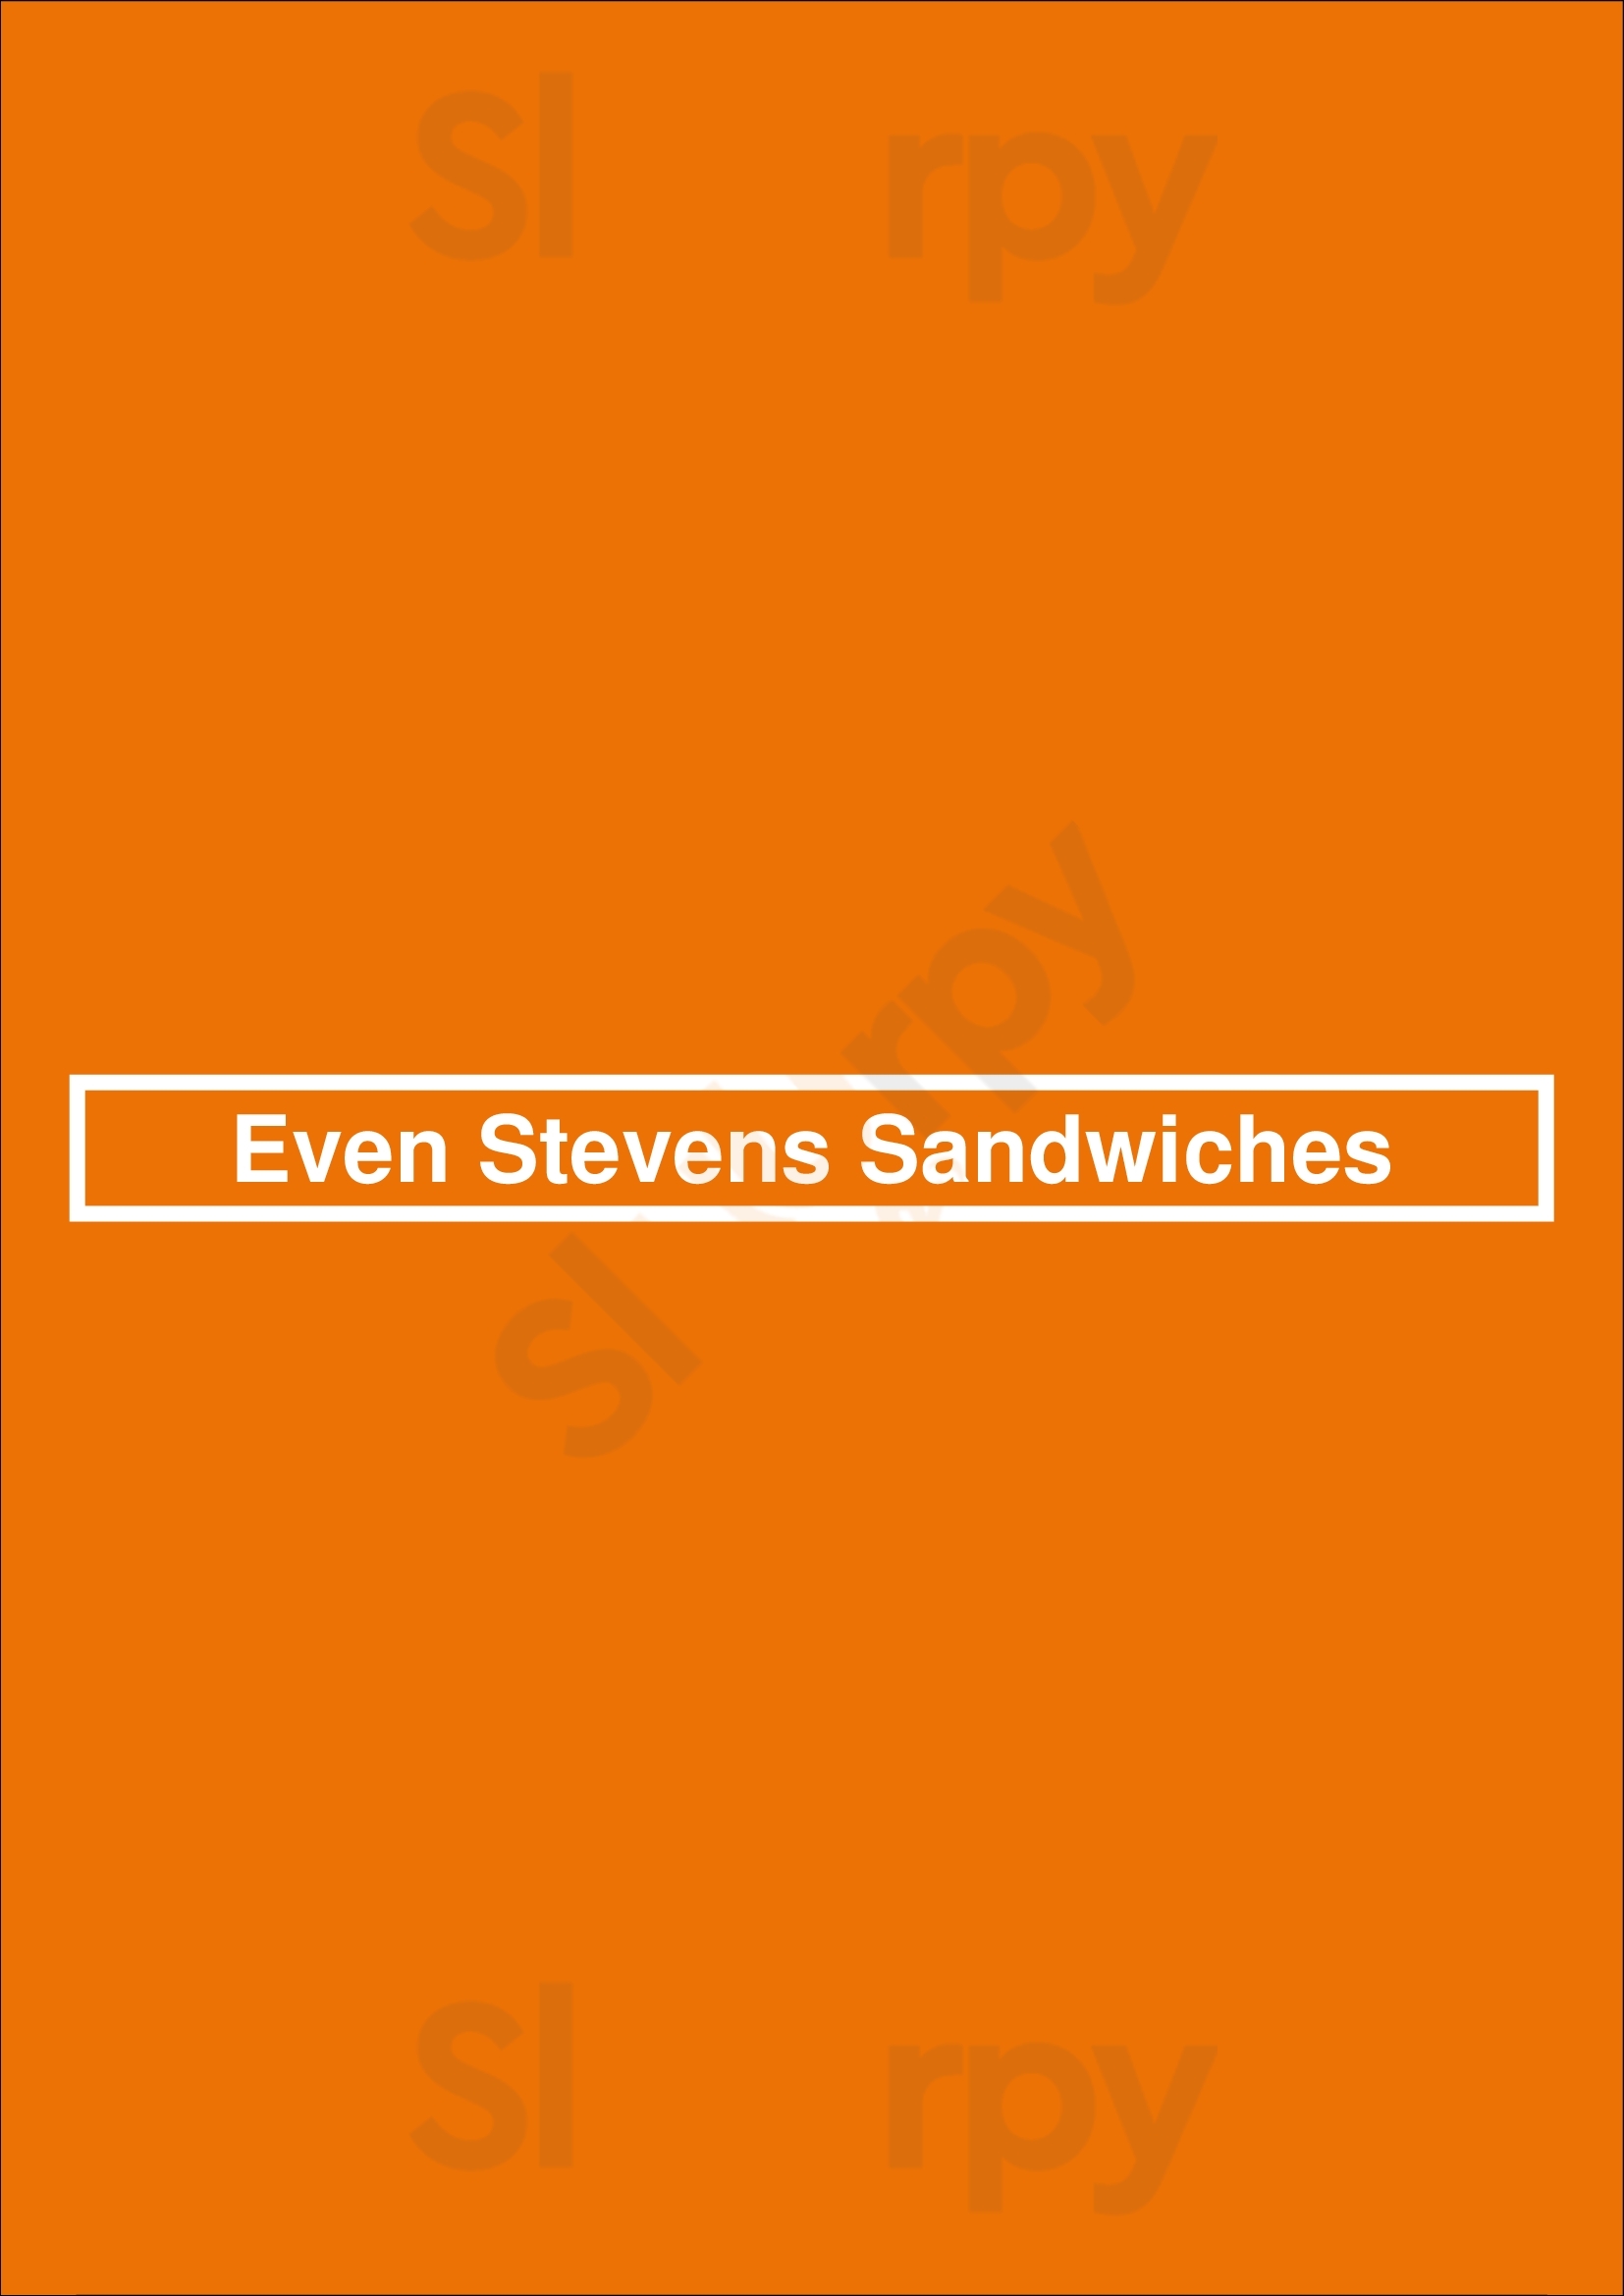 Even Stevens Sandwiches Salt Lake City Menu - 1